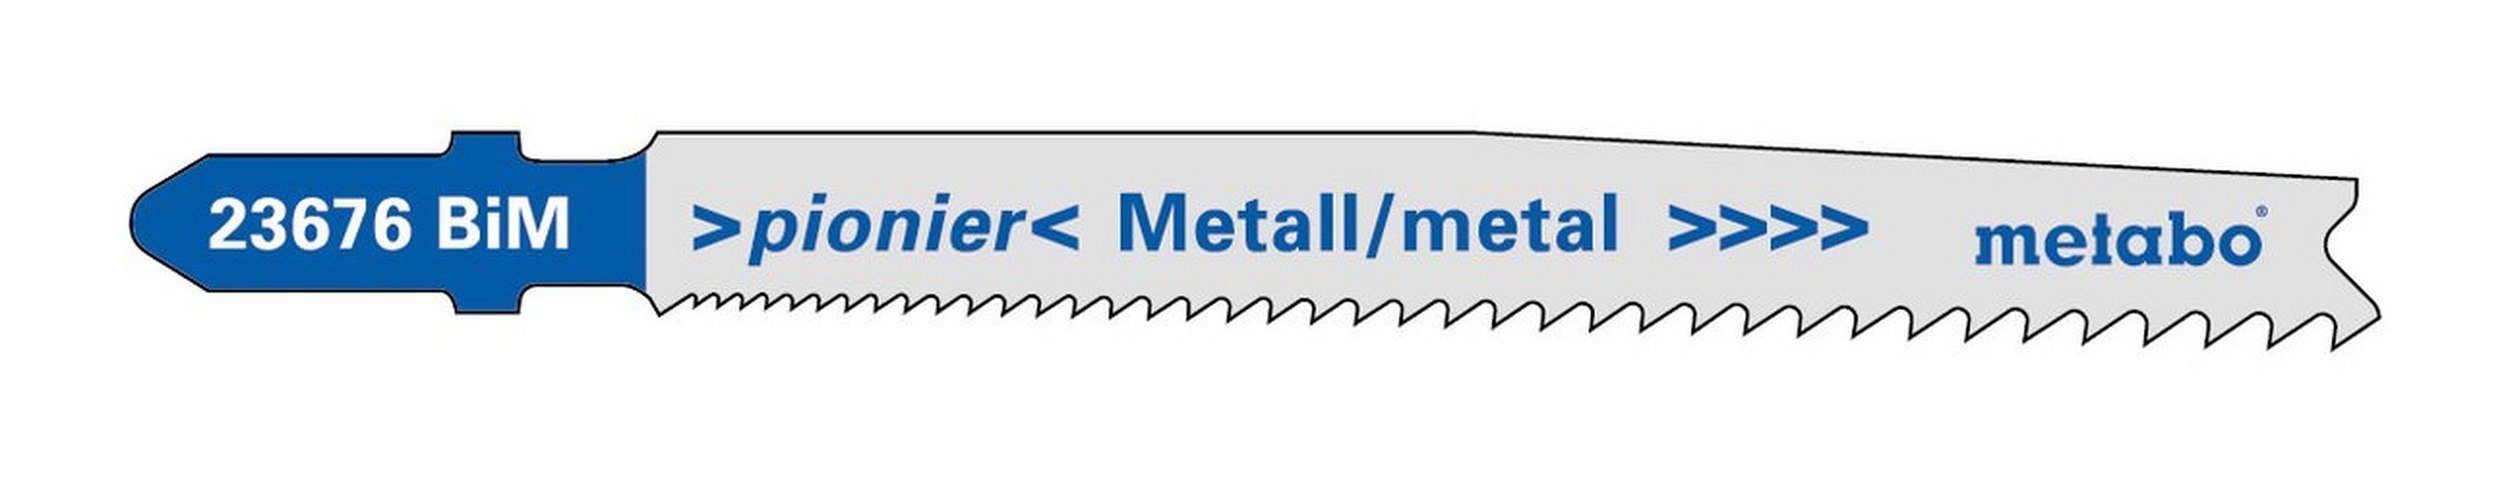 metabo Stichsägeblatt (5 Stück), Stichsägeblätter Metall Serie pionier 74 mm progressiv BiM | Stichsägeblätter